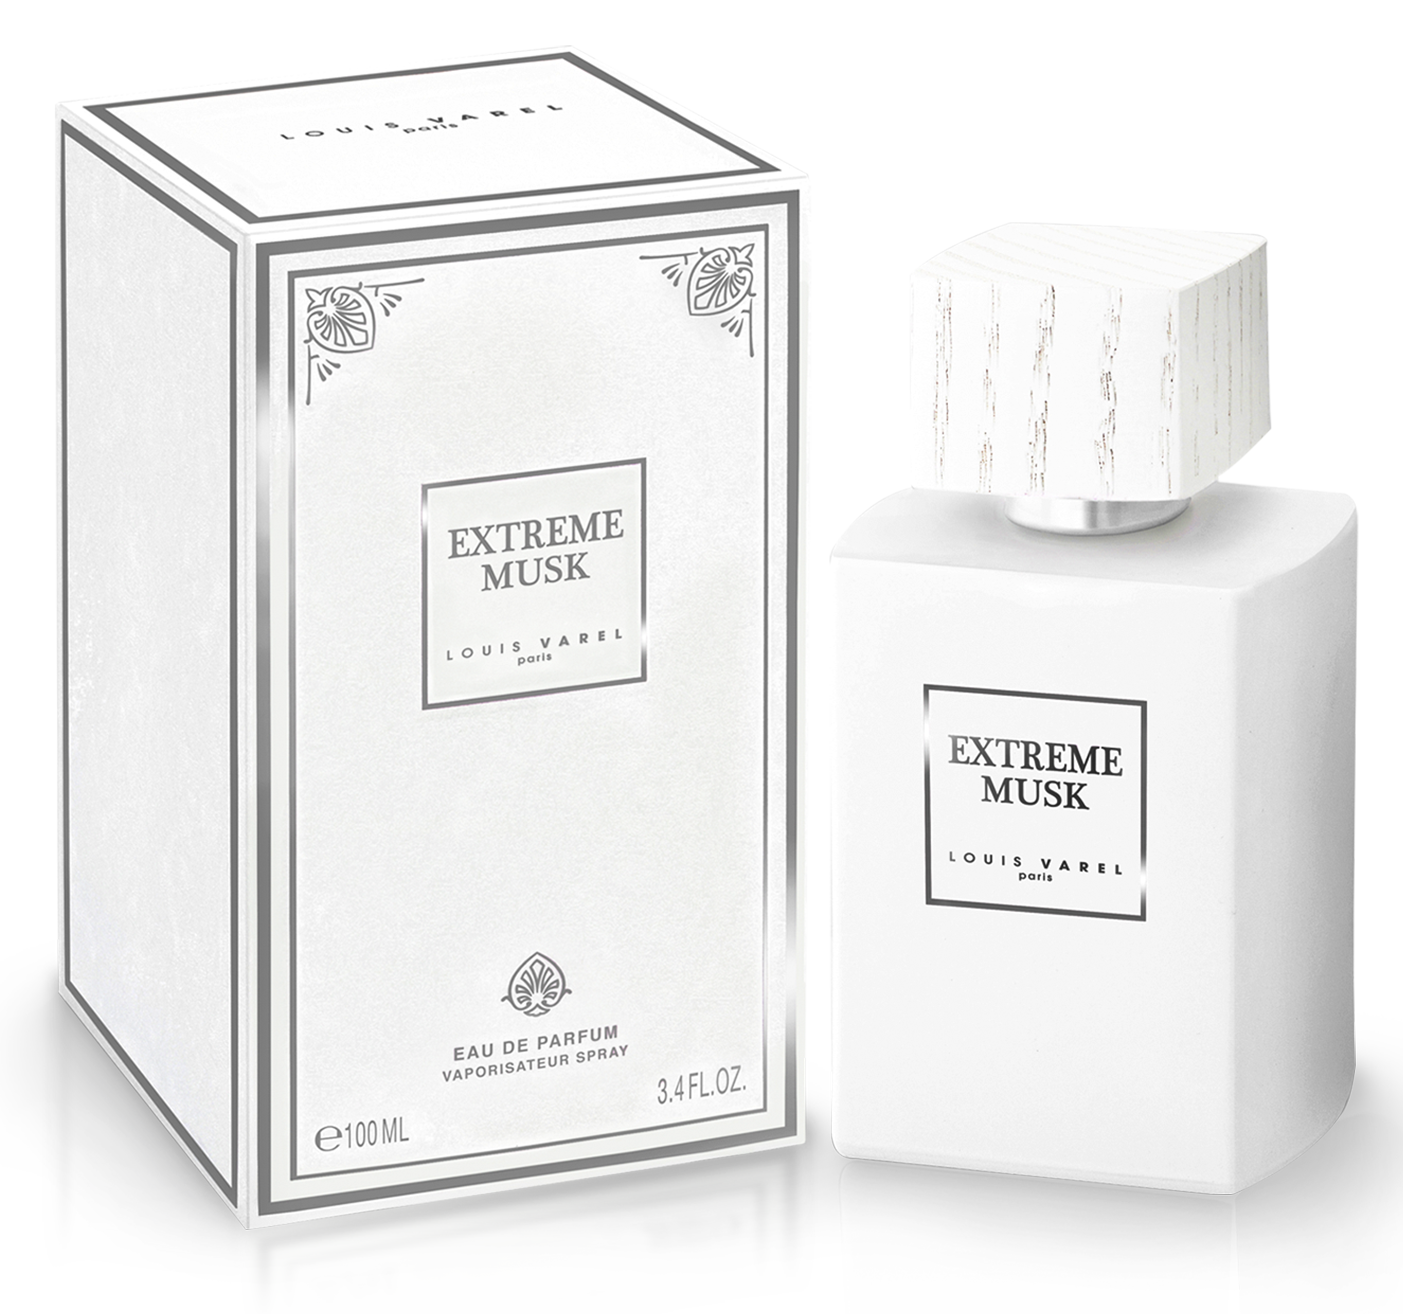 My Desire Louis Varel perfume - a fragrance for women 2019